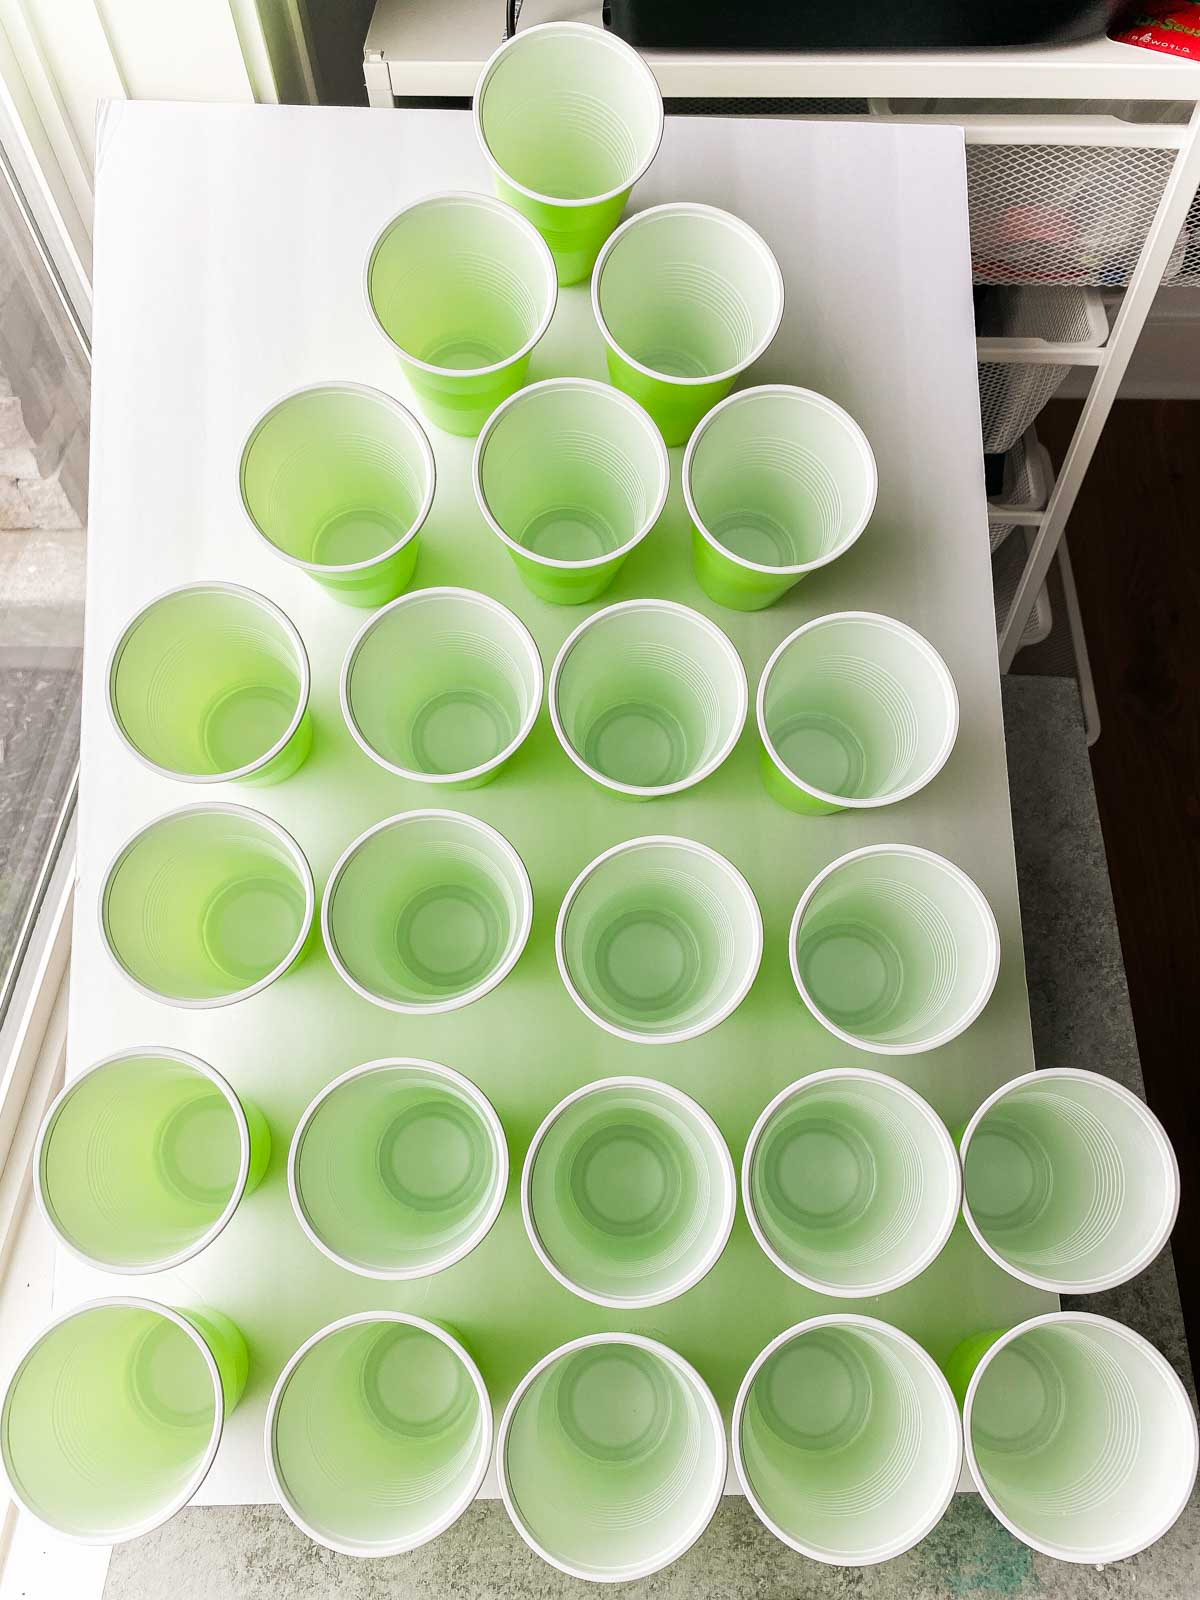 green plastic cups glued to a foam board